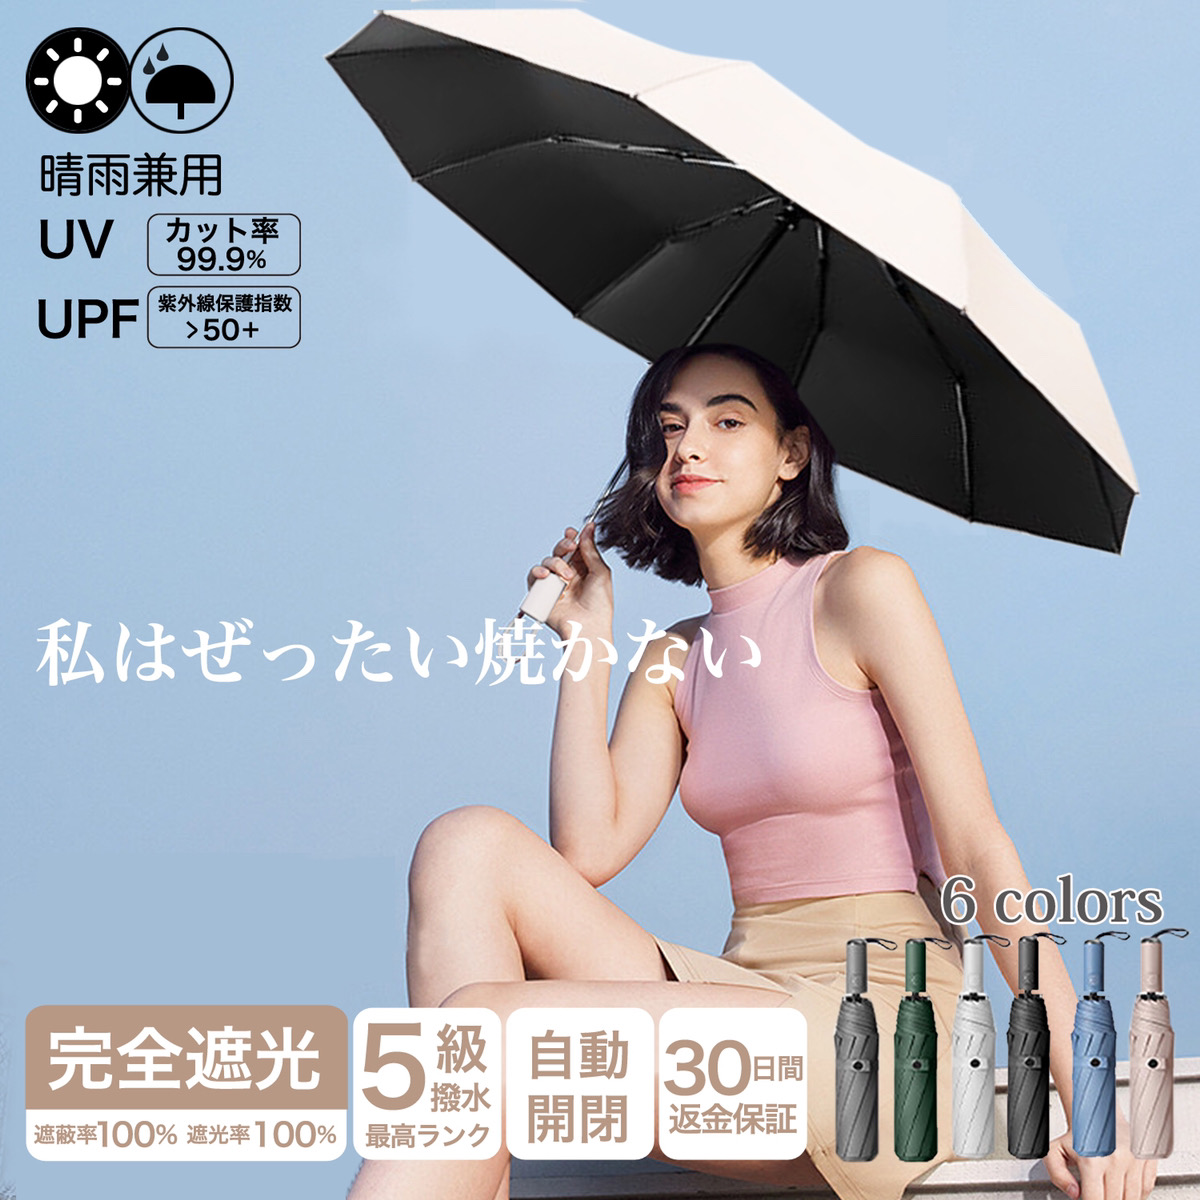 CONVERSE 雨晴兼用 折り畳み傘 UV90%以上